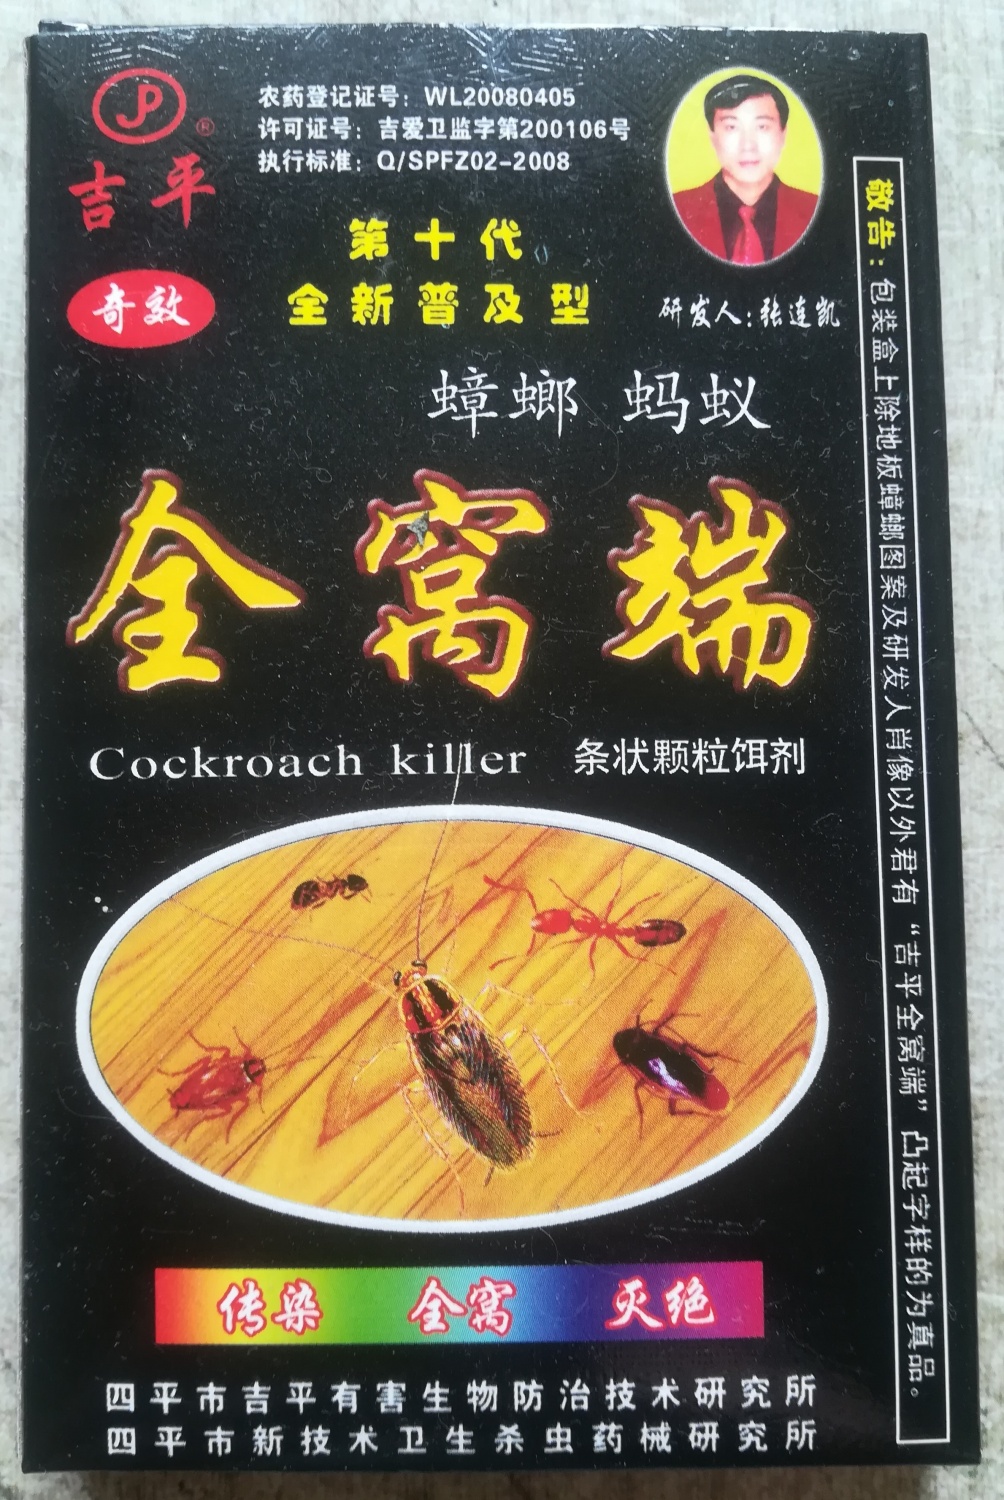  от тараканов гранулированная приманка Цзинь Юй Дуань .